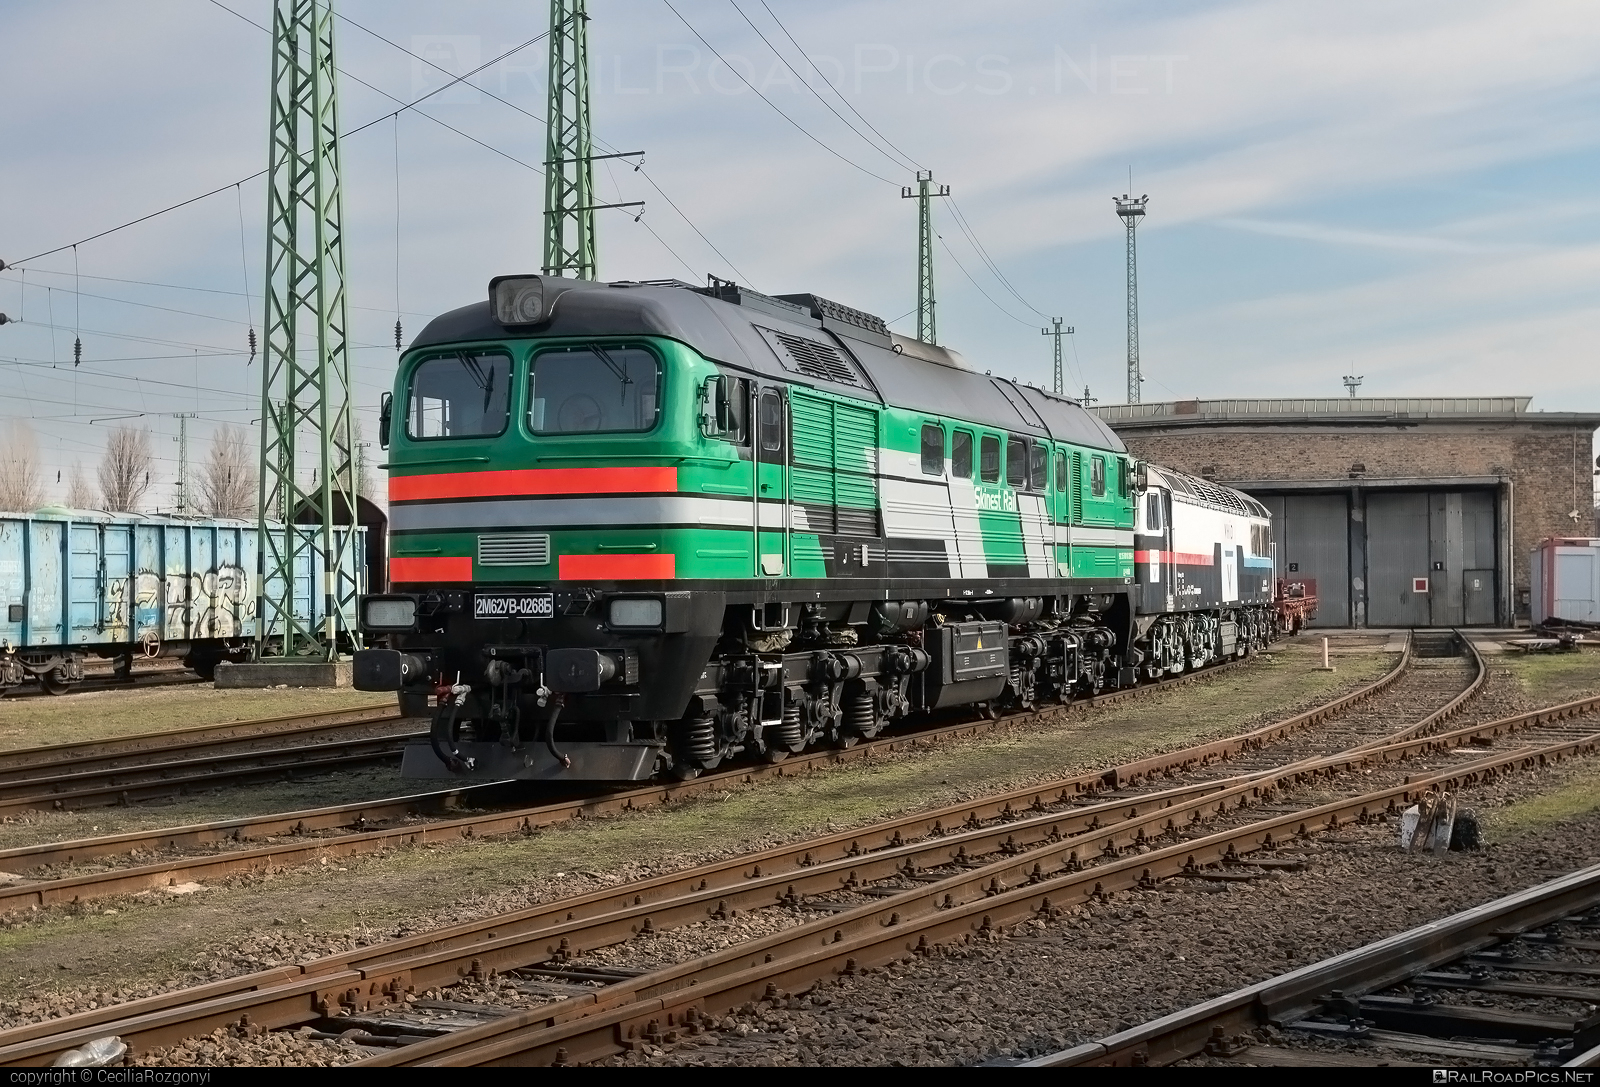 Lugansk M62 - 010 268-1 operated by V-HÍD Vagyonkezelő Kft. #locomotivem62 #ltz #ltzm62 #lugansk #luganskm62 #luganskteplovoz #luhansklocomotiveworks #luhanskteplovoz #m62 #m62locomotive #sergei #vhid